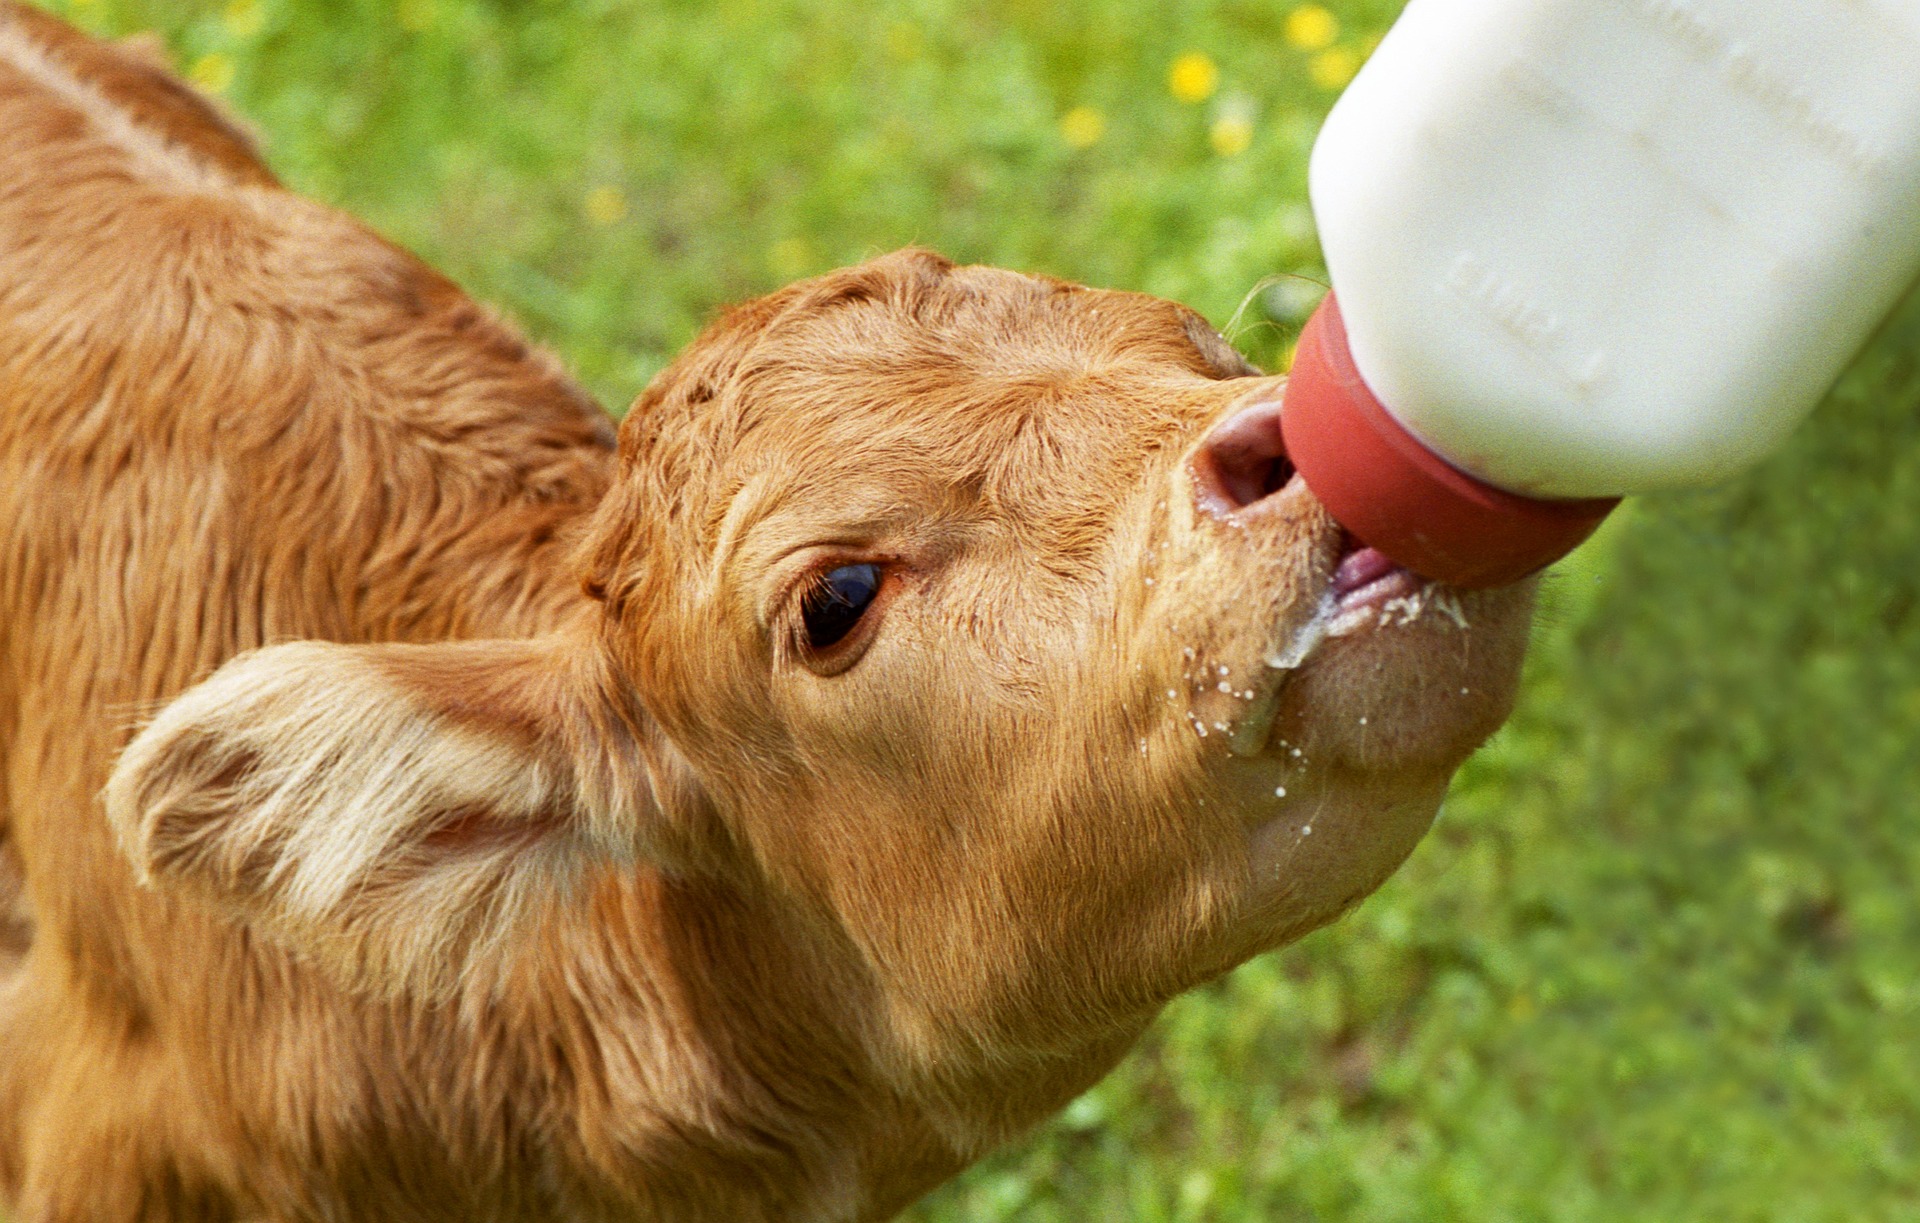 calf drinking milk from bottle